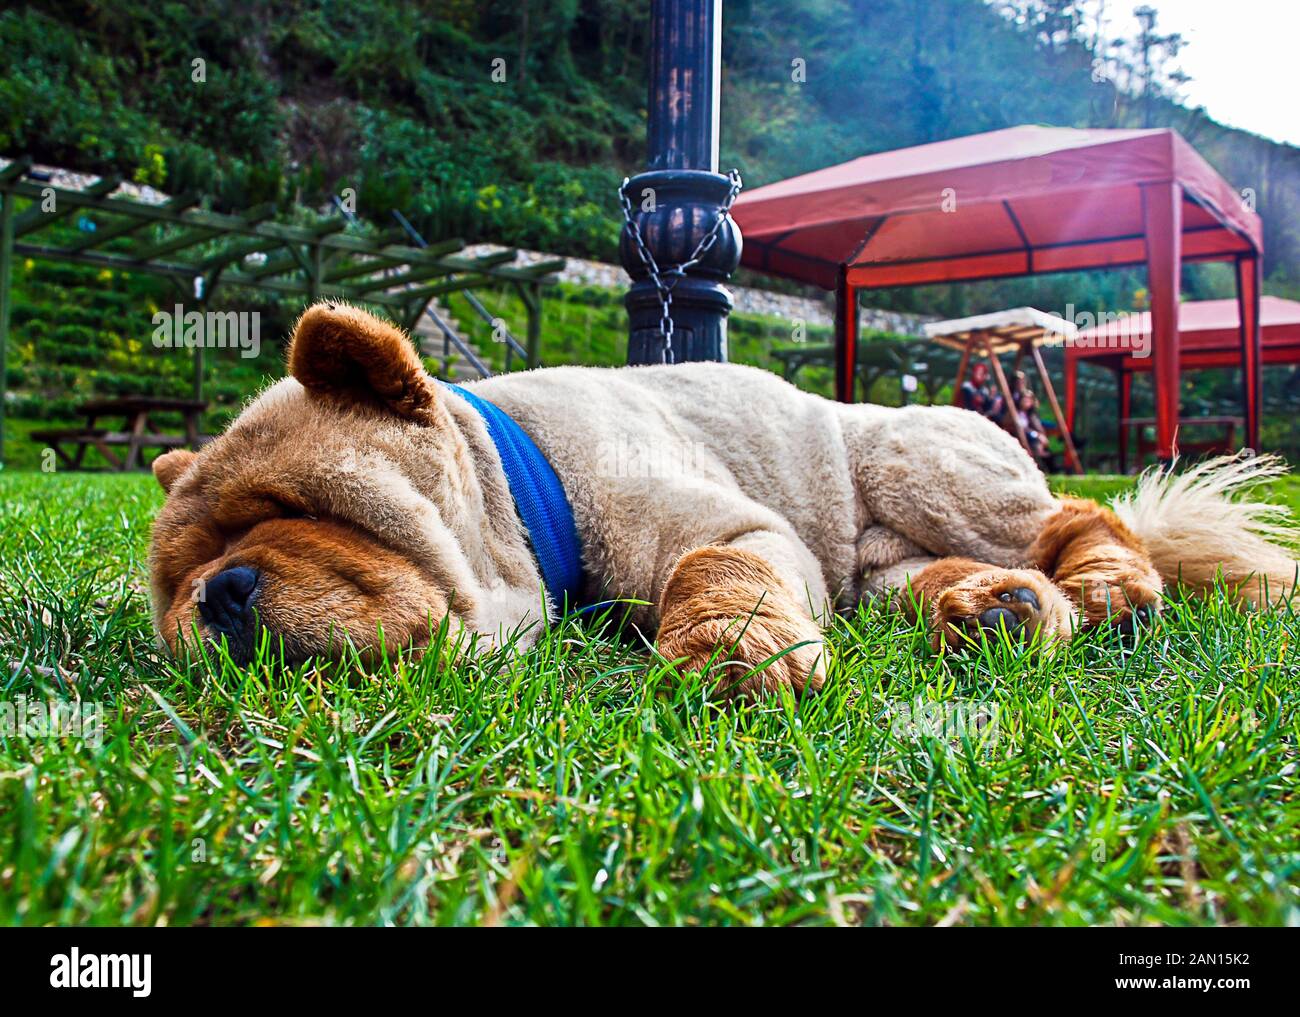 https://c8.alamy.com/comp/2AN15K2/beautiful-dog-chow-chow-in-the-park-chow-chow-breed-dog-sleeping-on-grass-2AN15K2.jpg